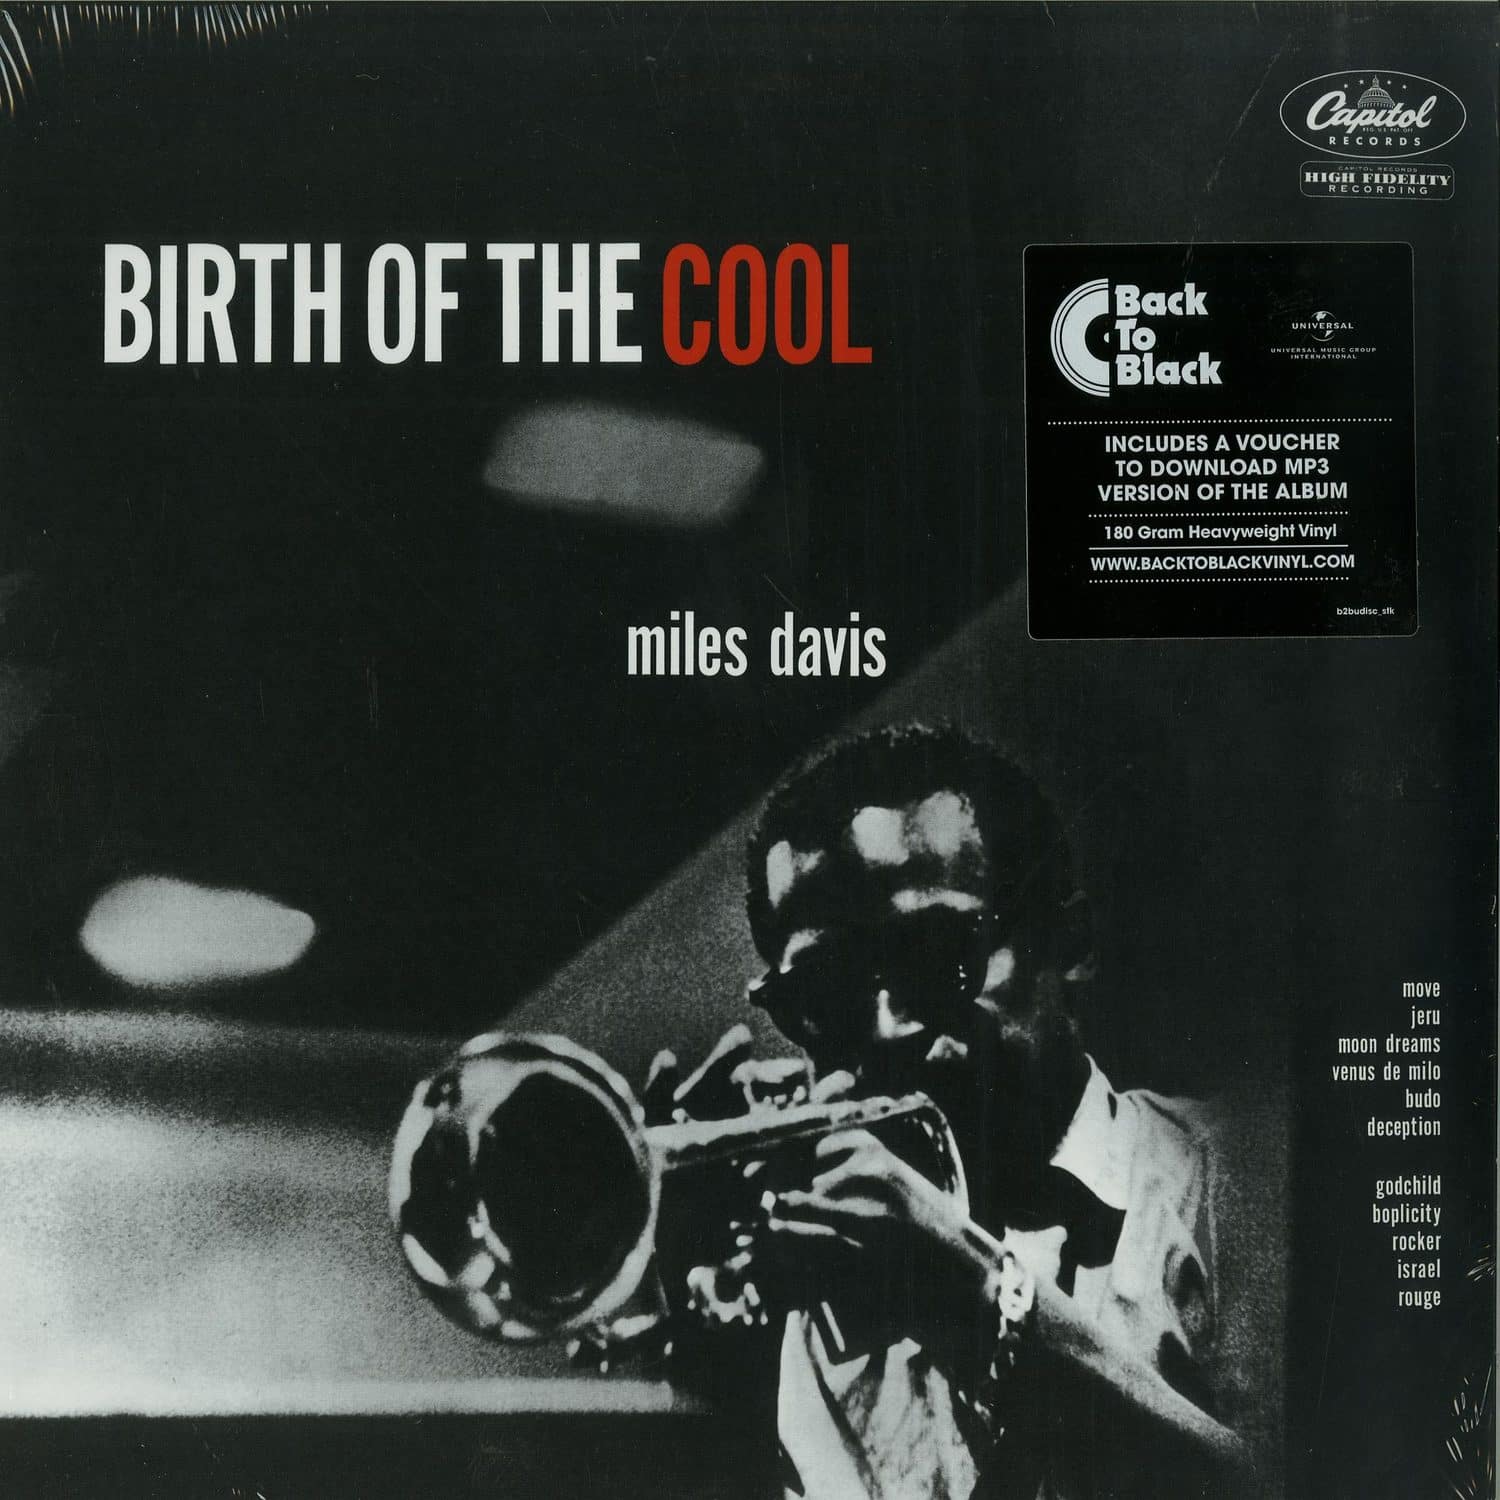 Miles Davis - BIRTH OF THE COOL 